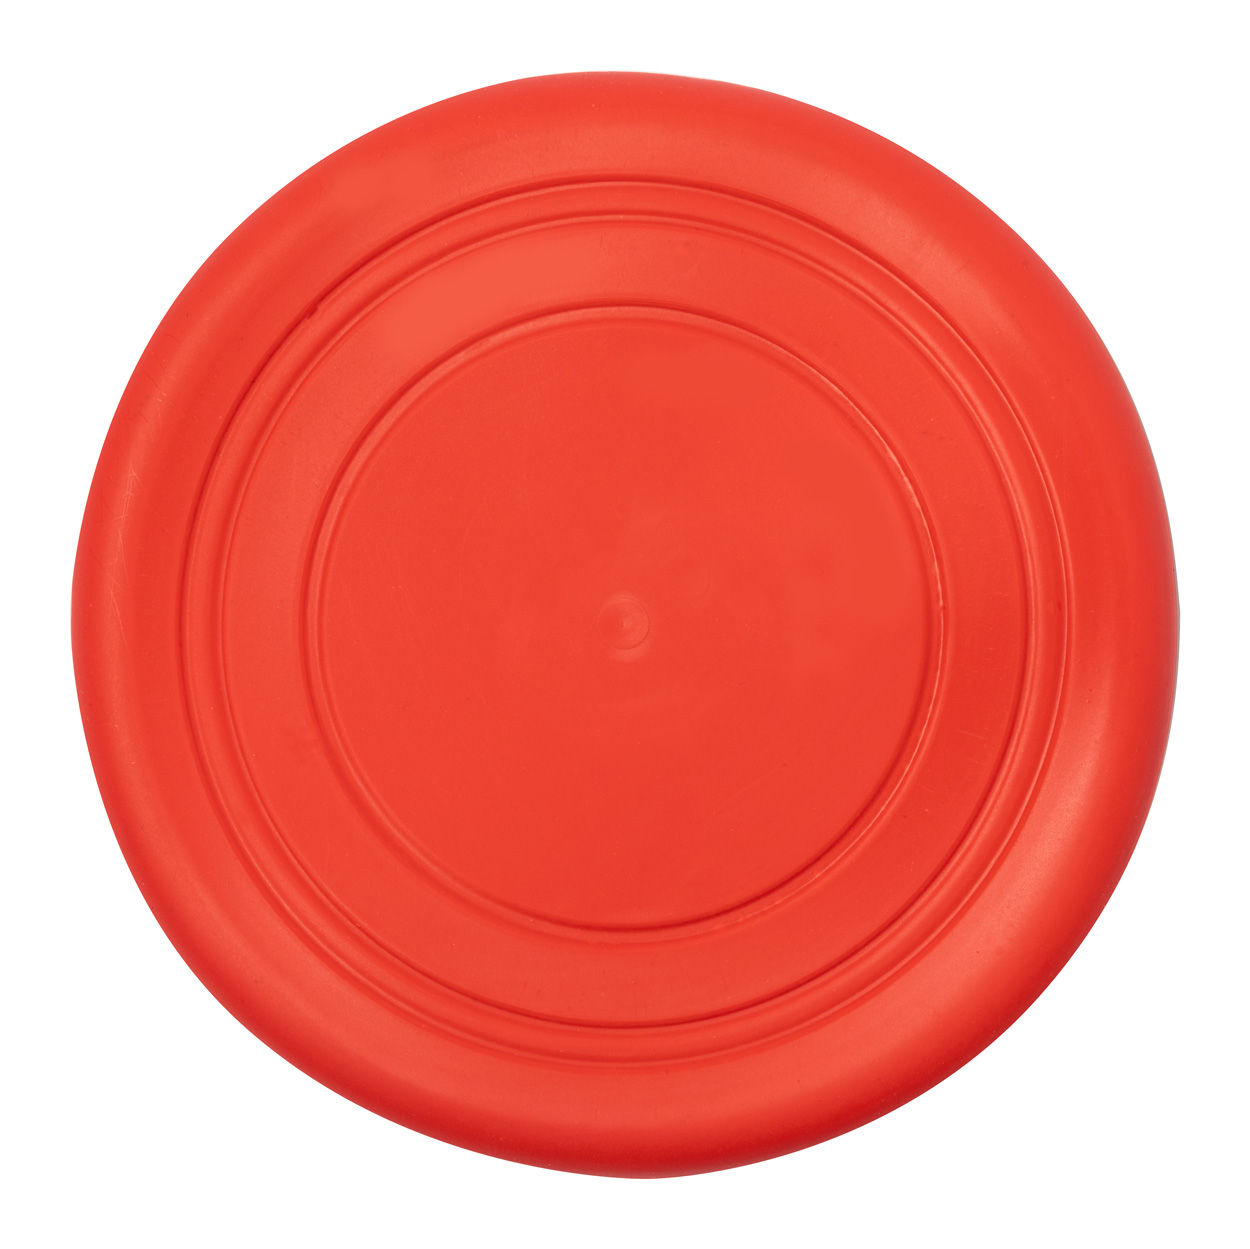 Giraud frisbee - red